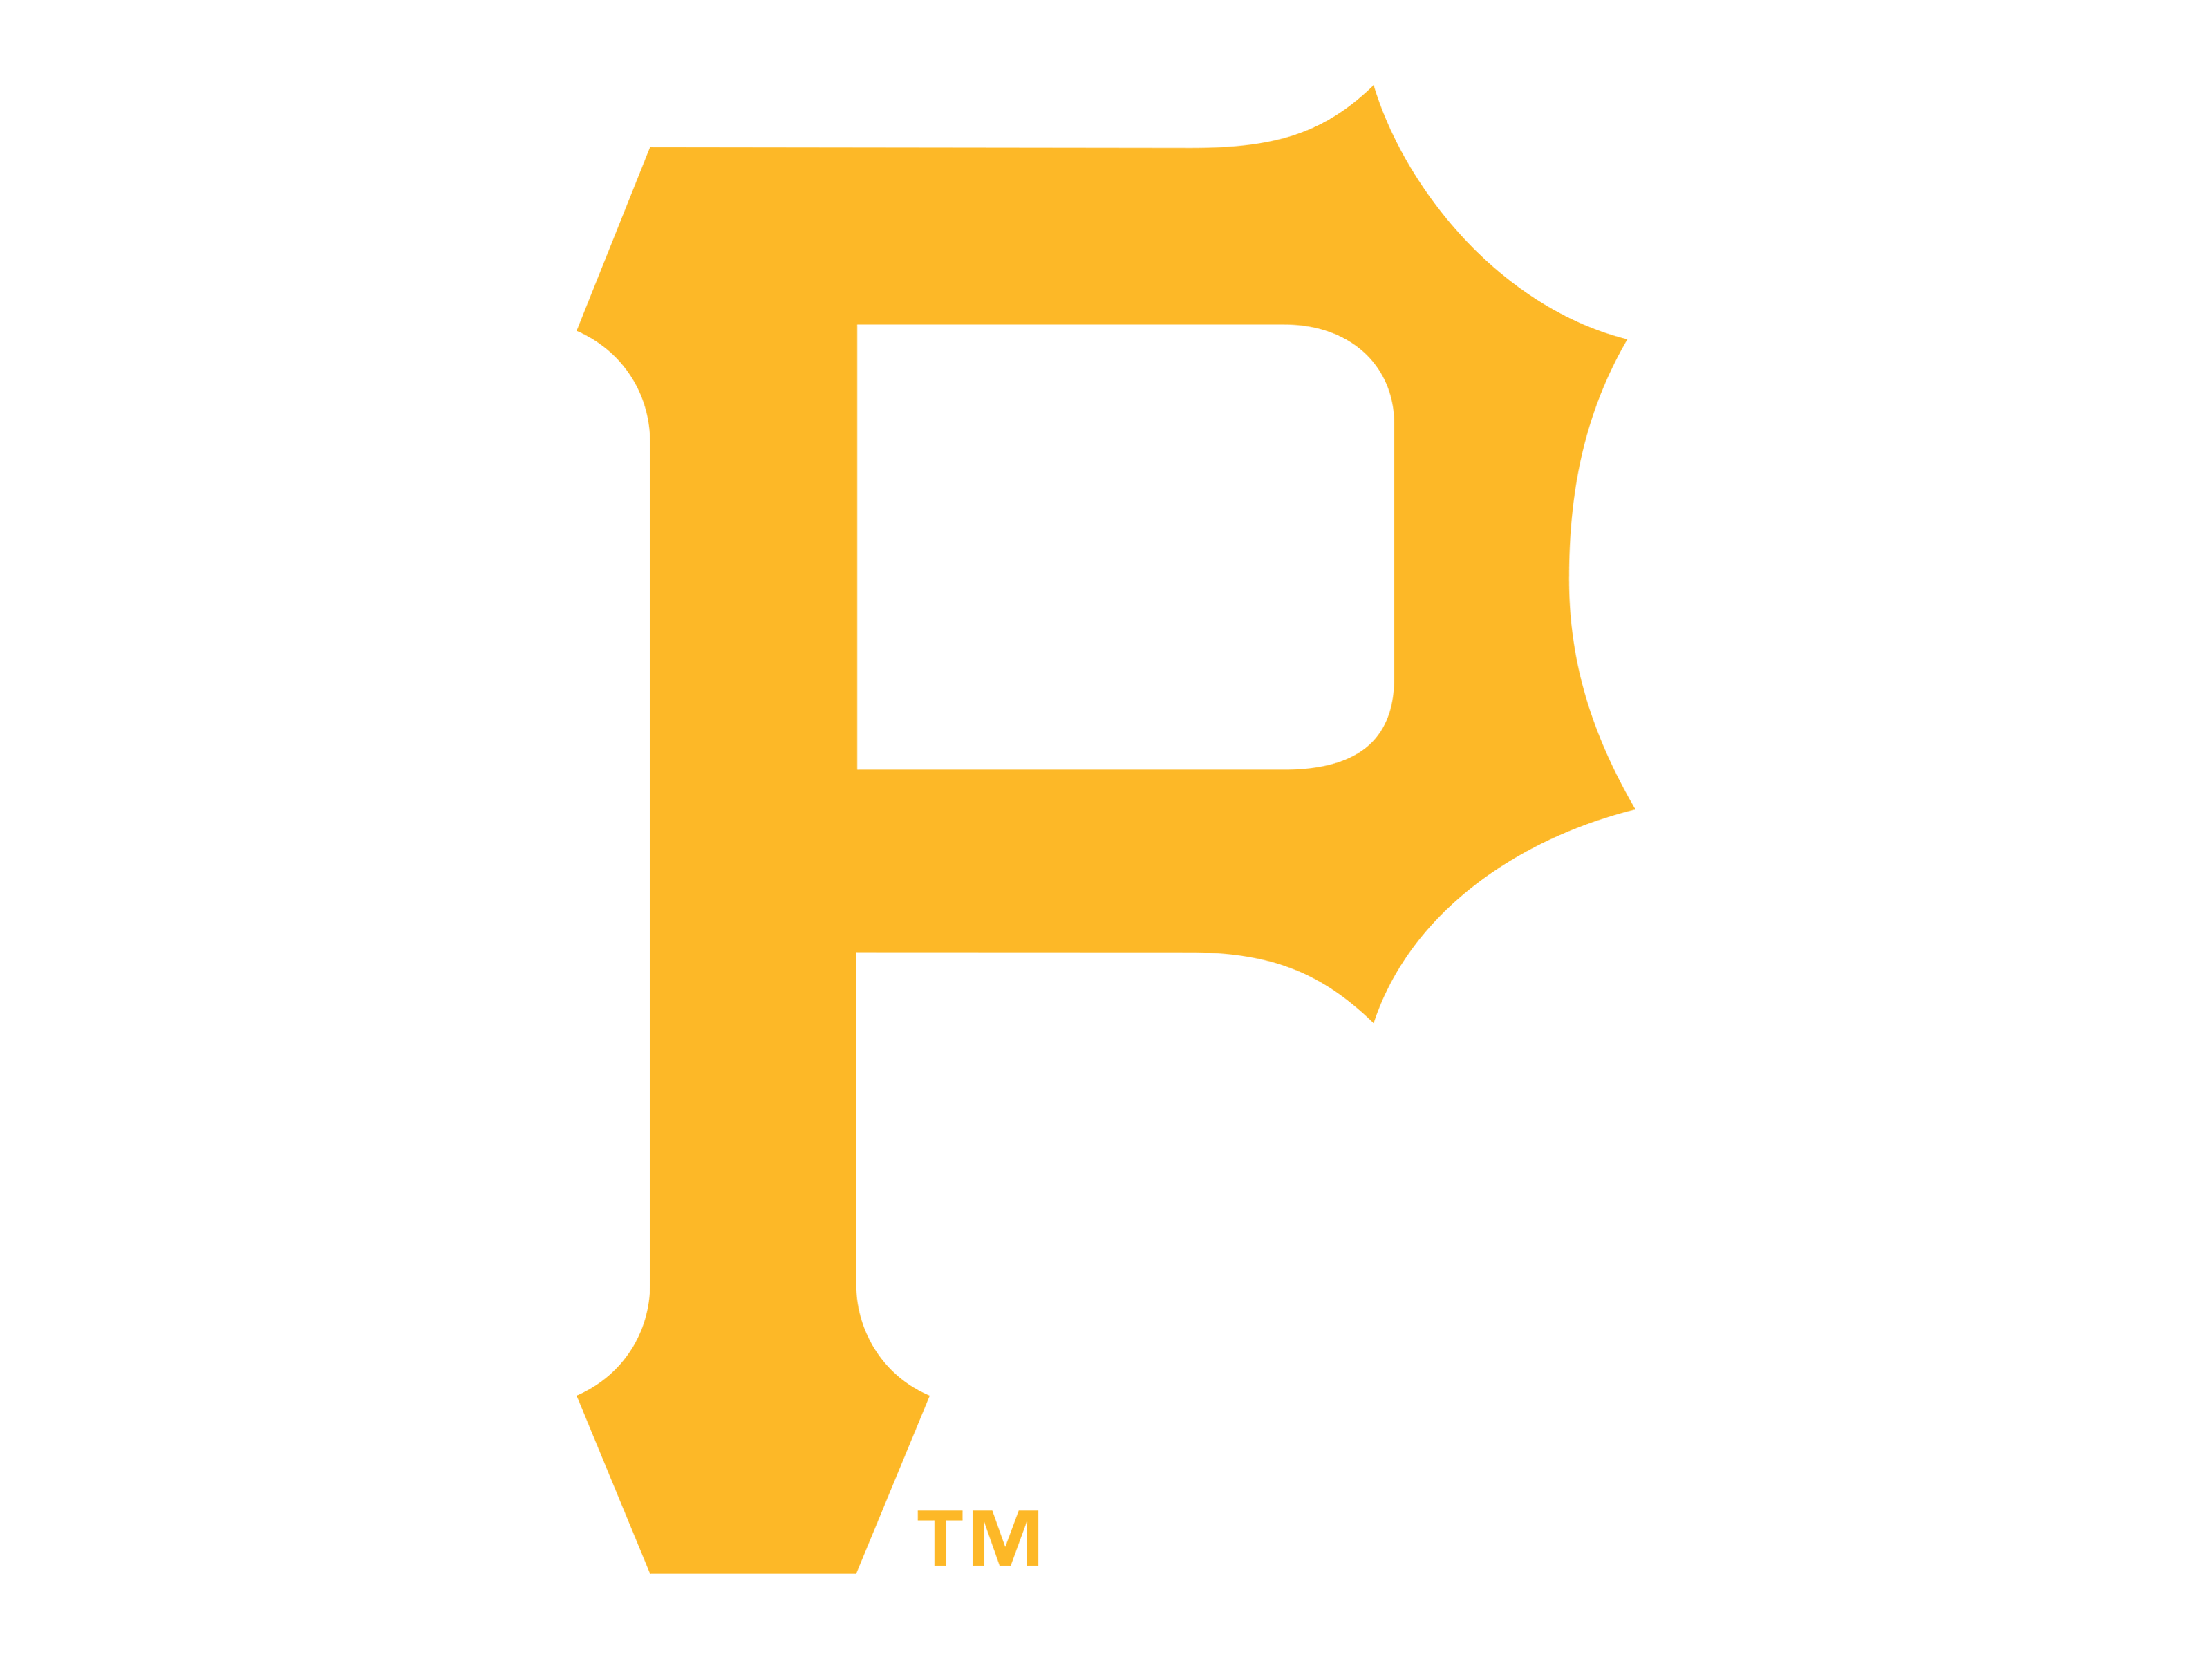 Pittsburgh Pirates